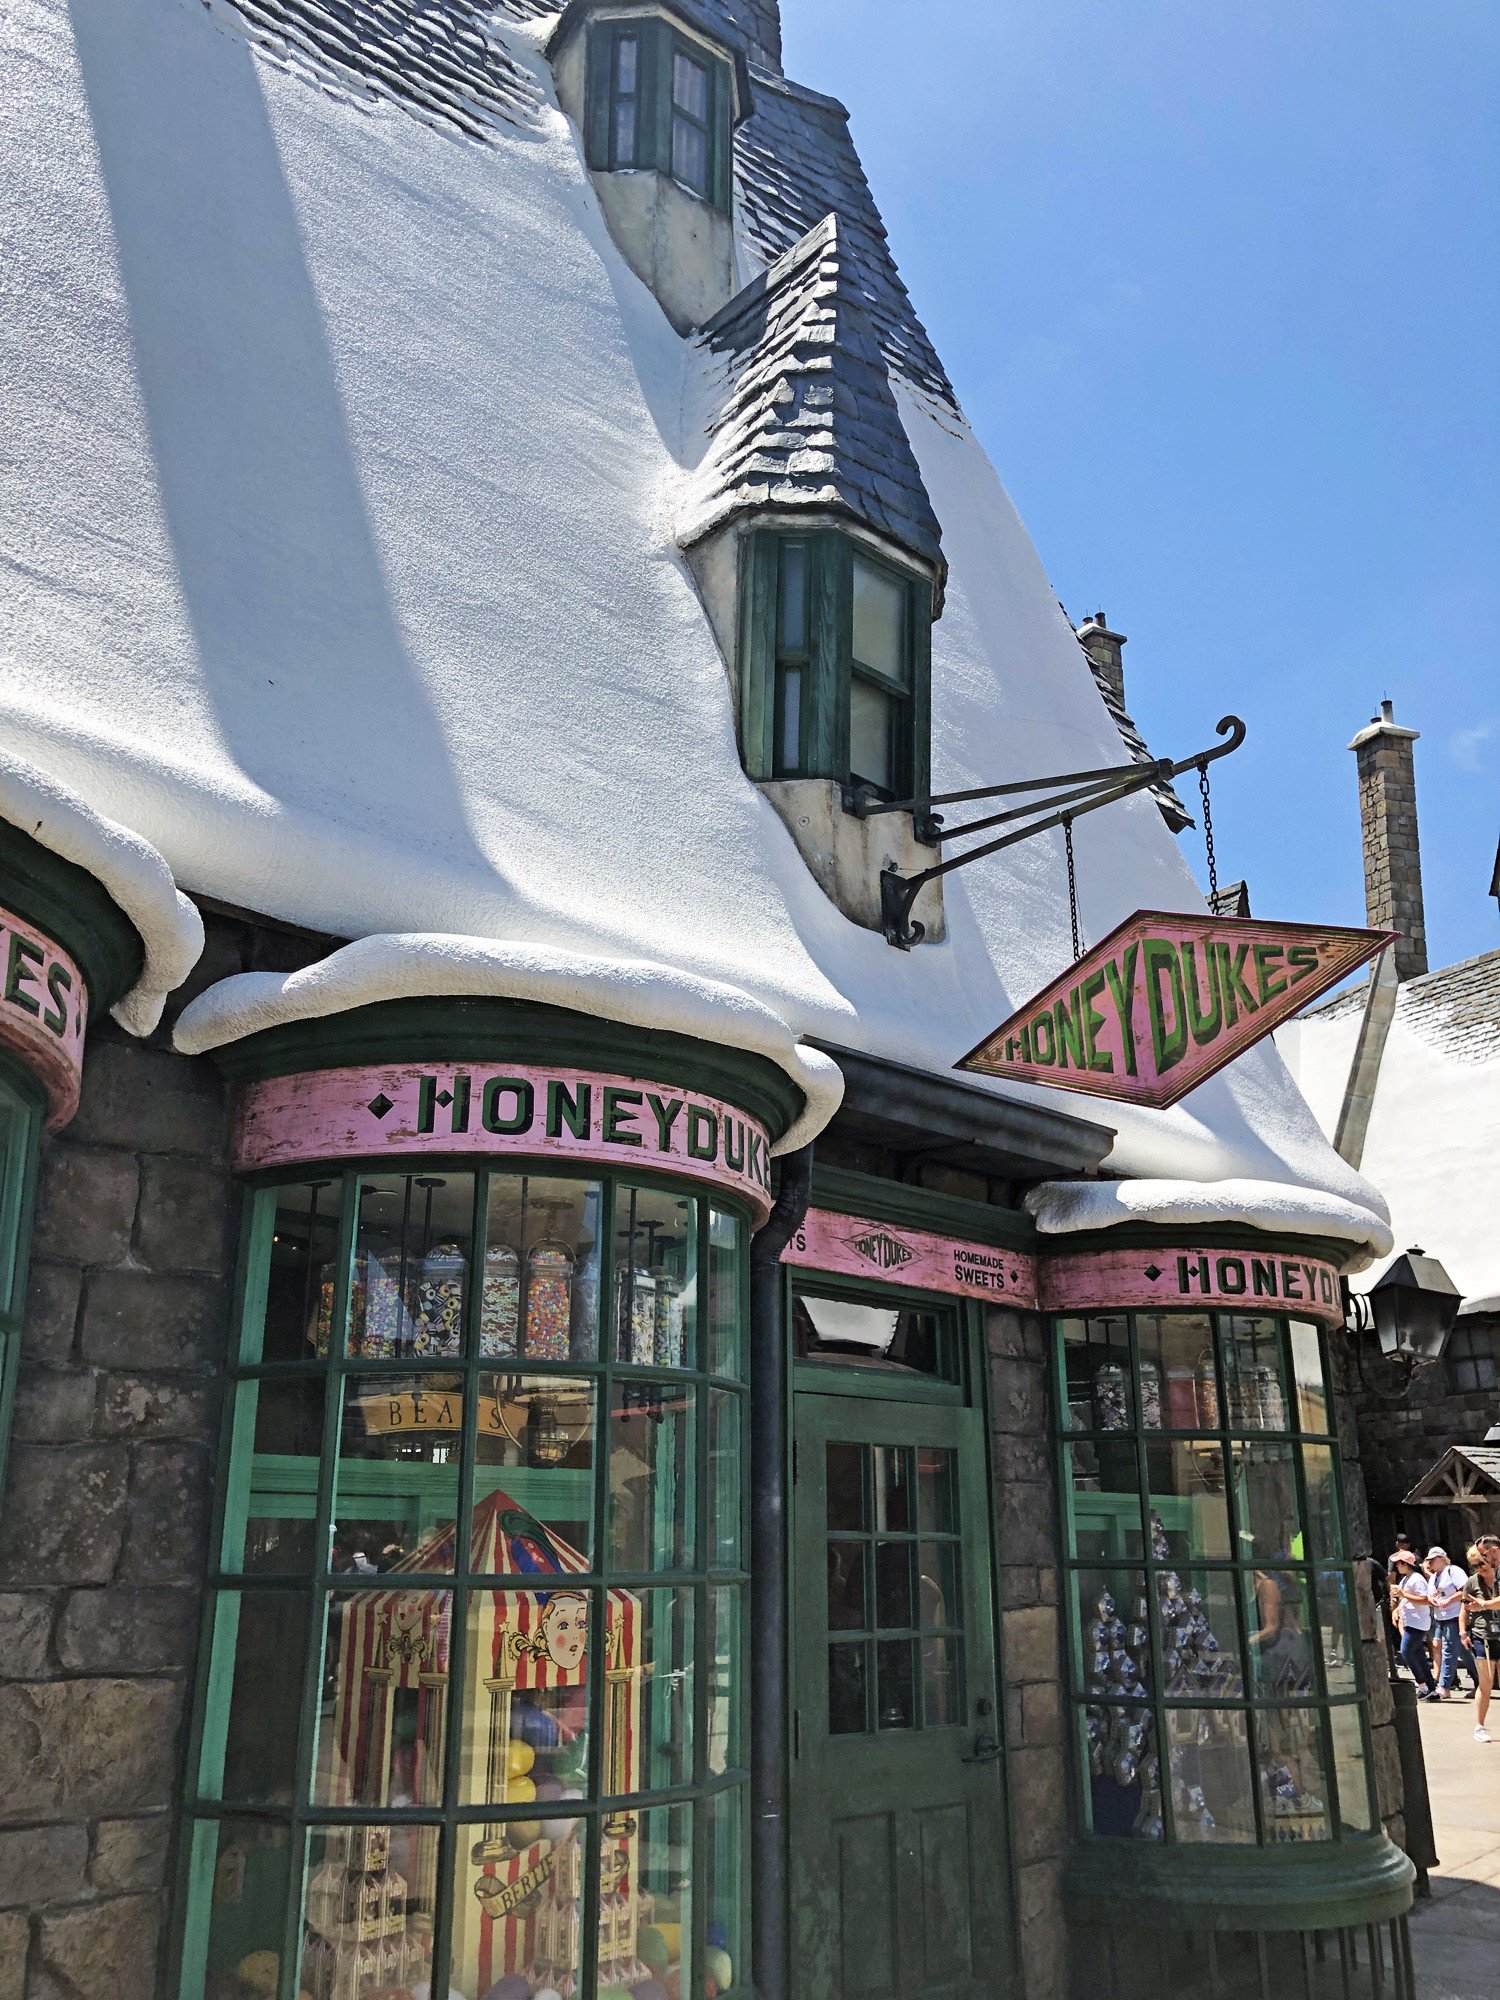 Honeydukes sweet shop at the Wizarding World of Harry Potter, Universal Studios, Florida